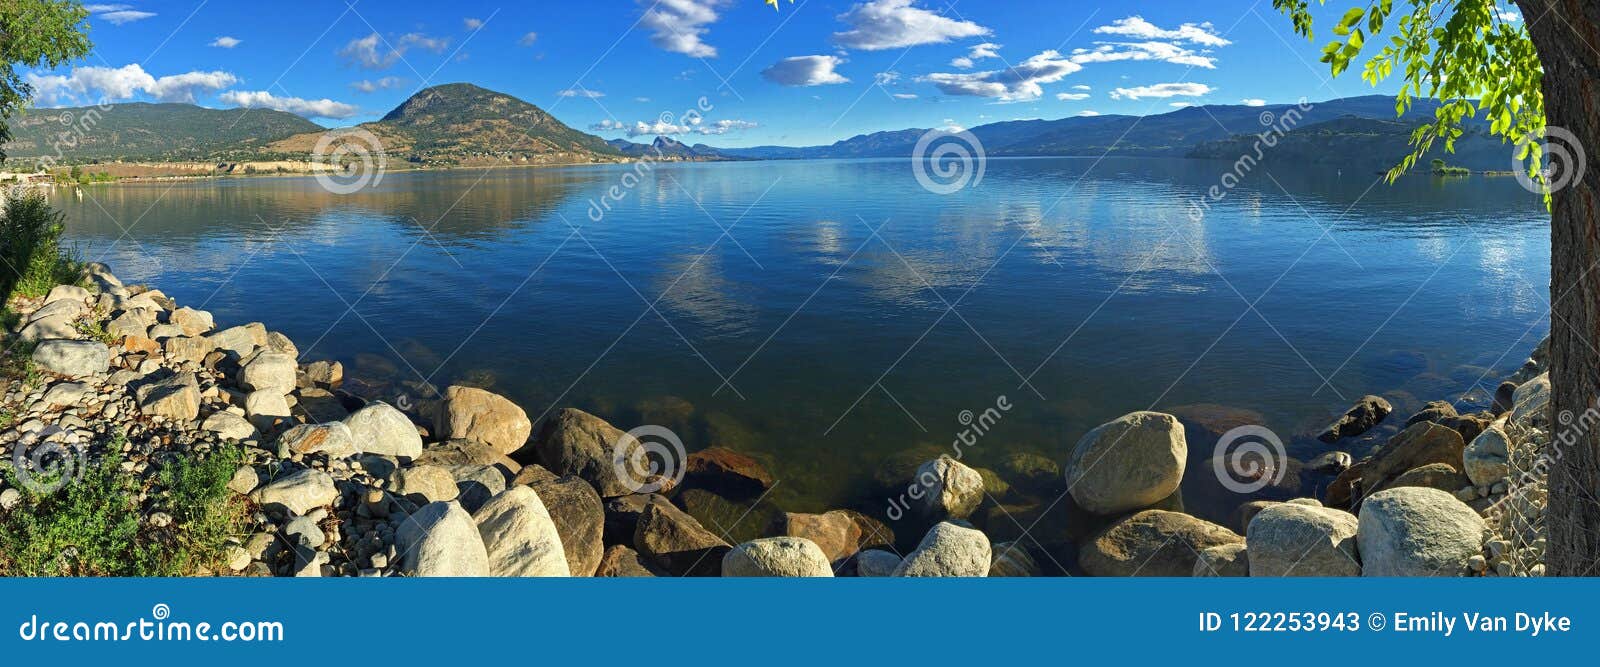 lake okanagan from penticton, british columbia